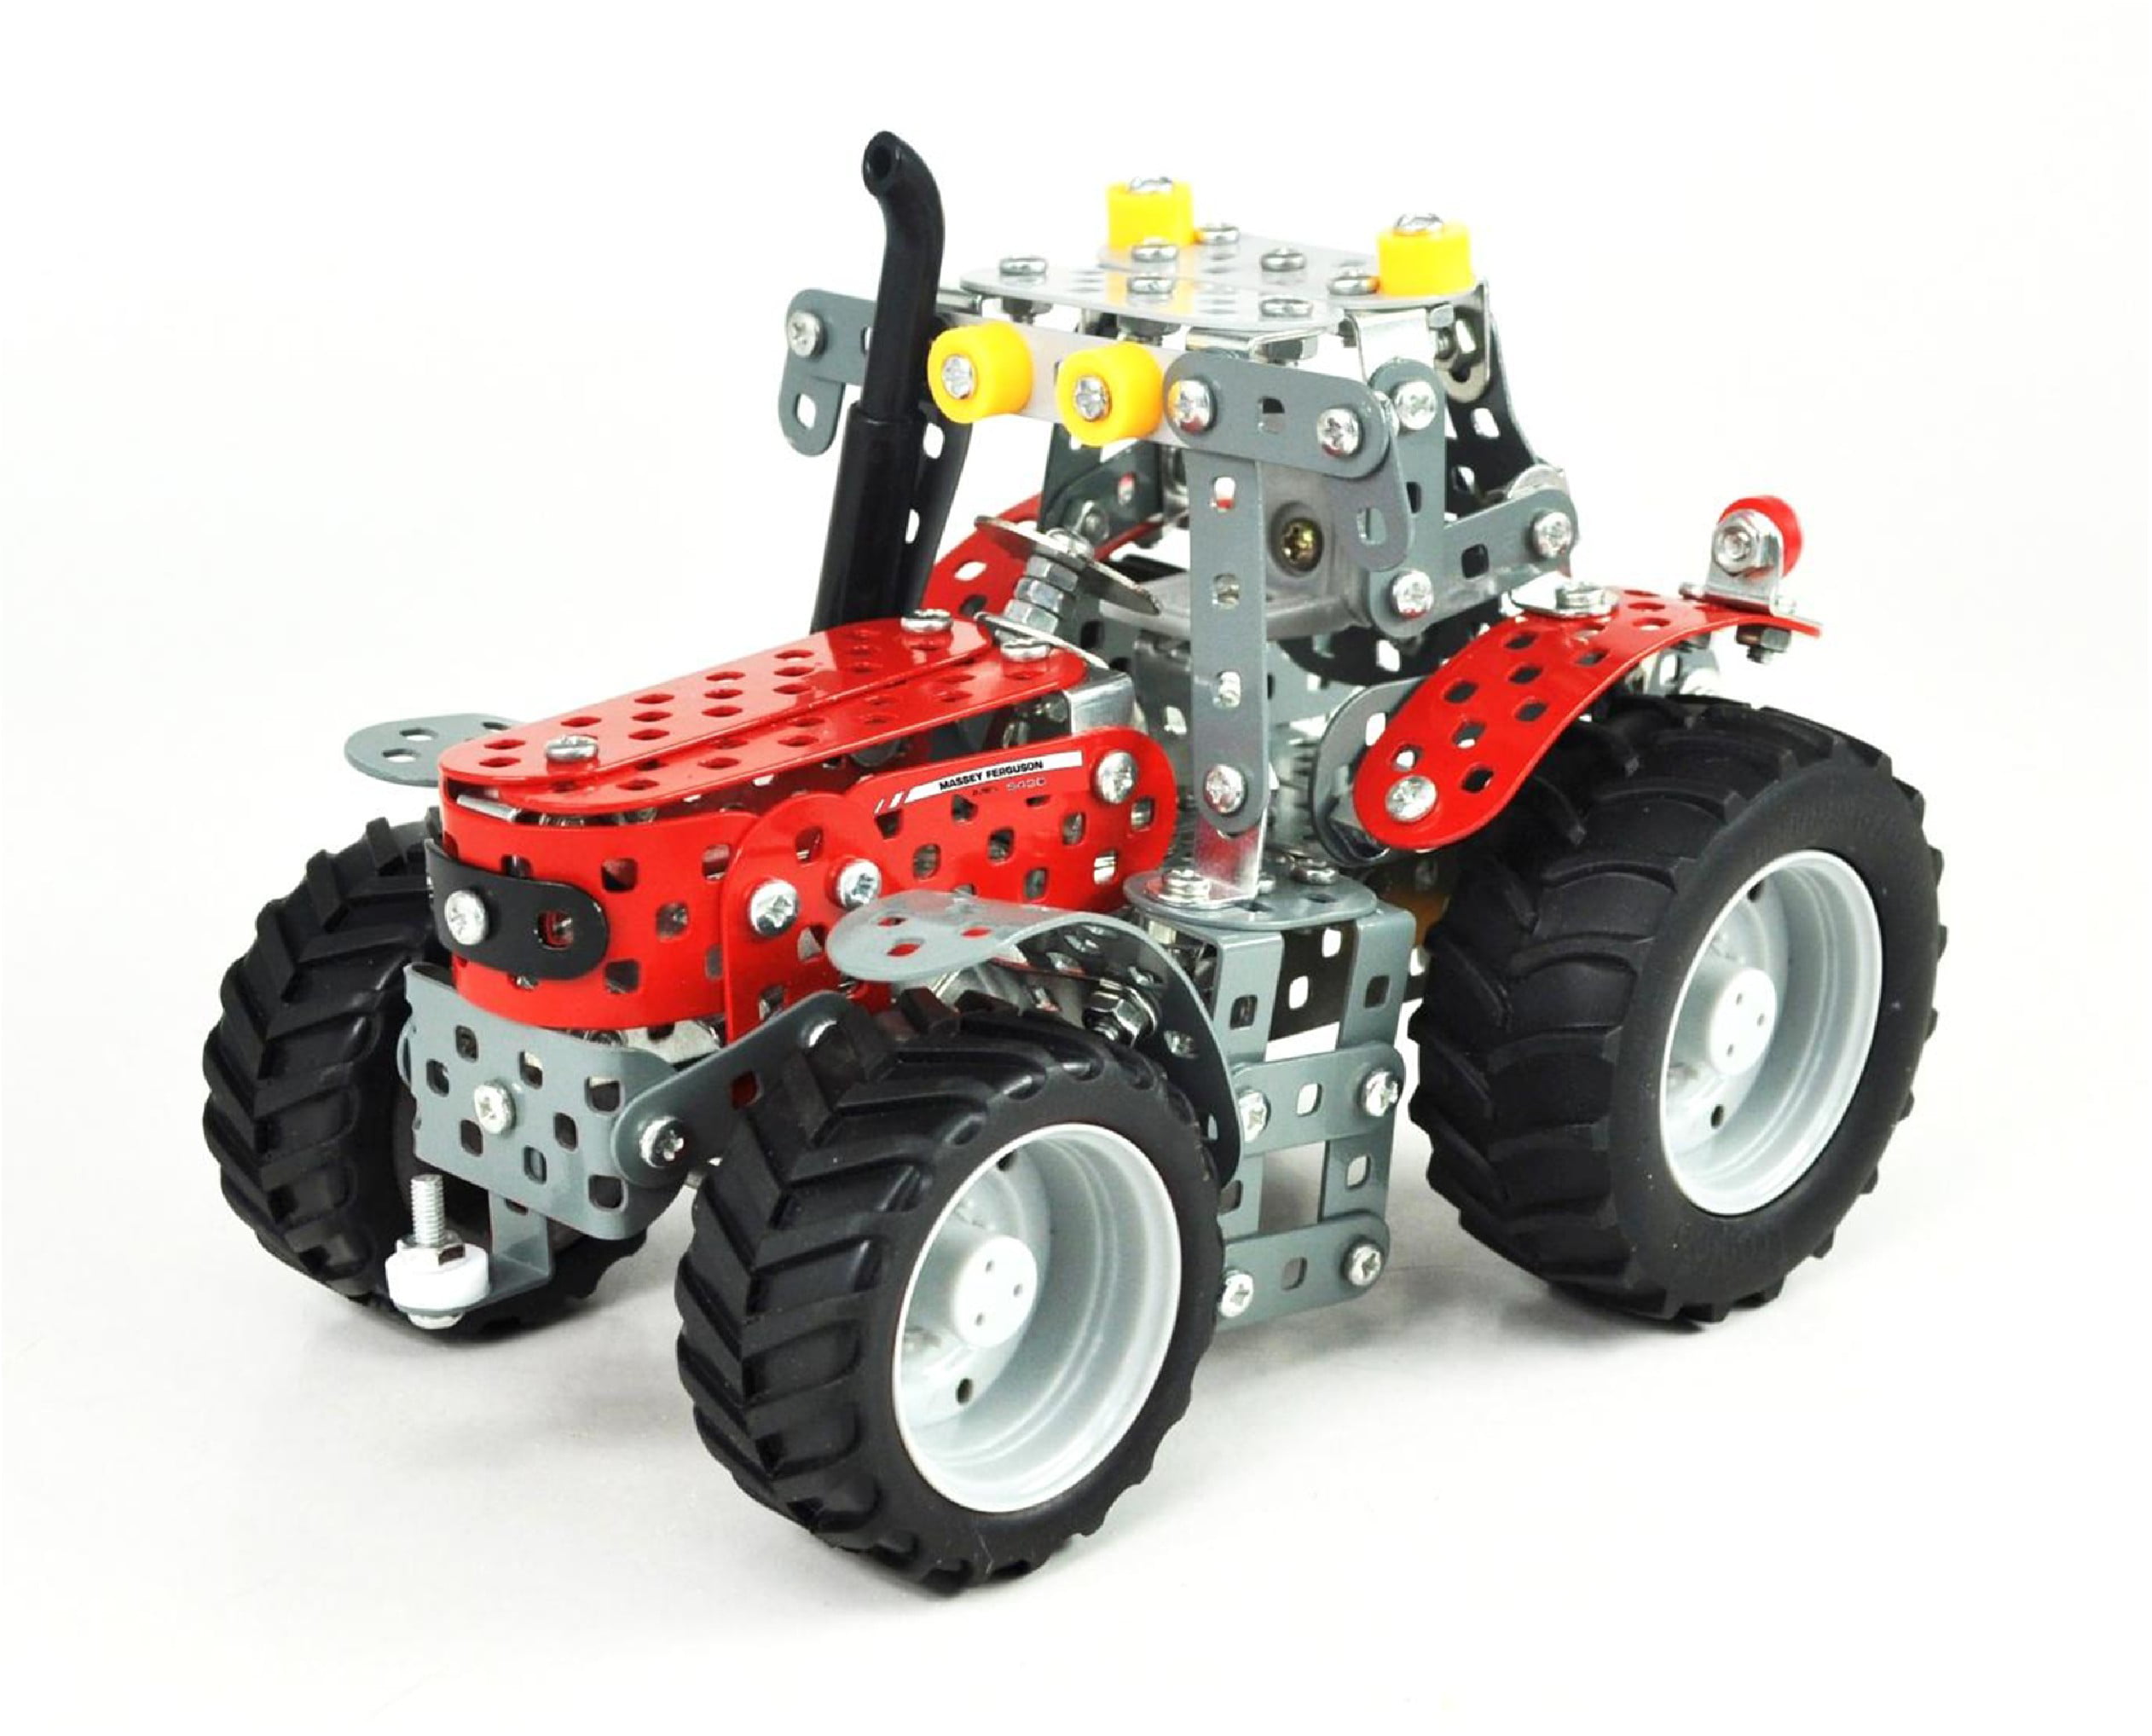 Tronico-METAL CONSTRUCTION KIT 6-in-1 Starter Beginner Kids Racing Cars Buggies